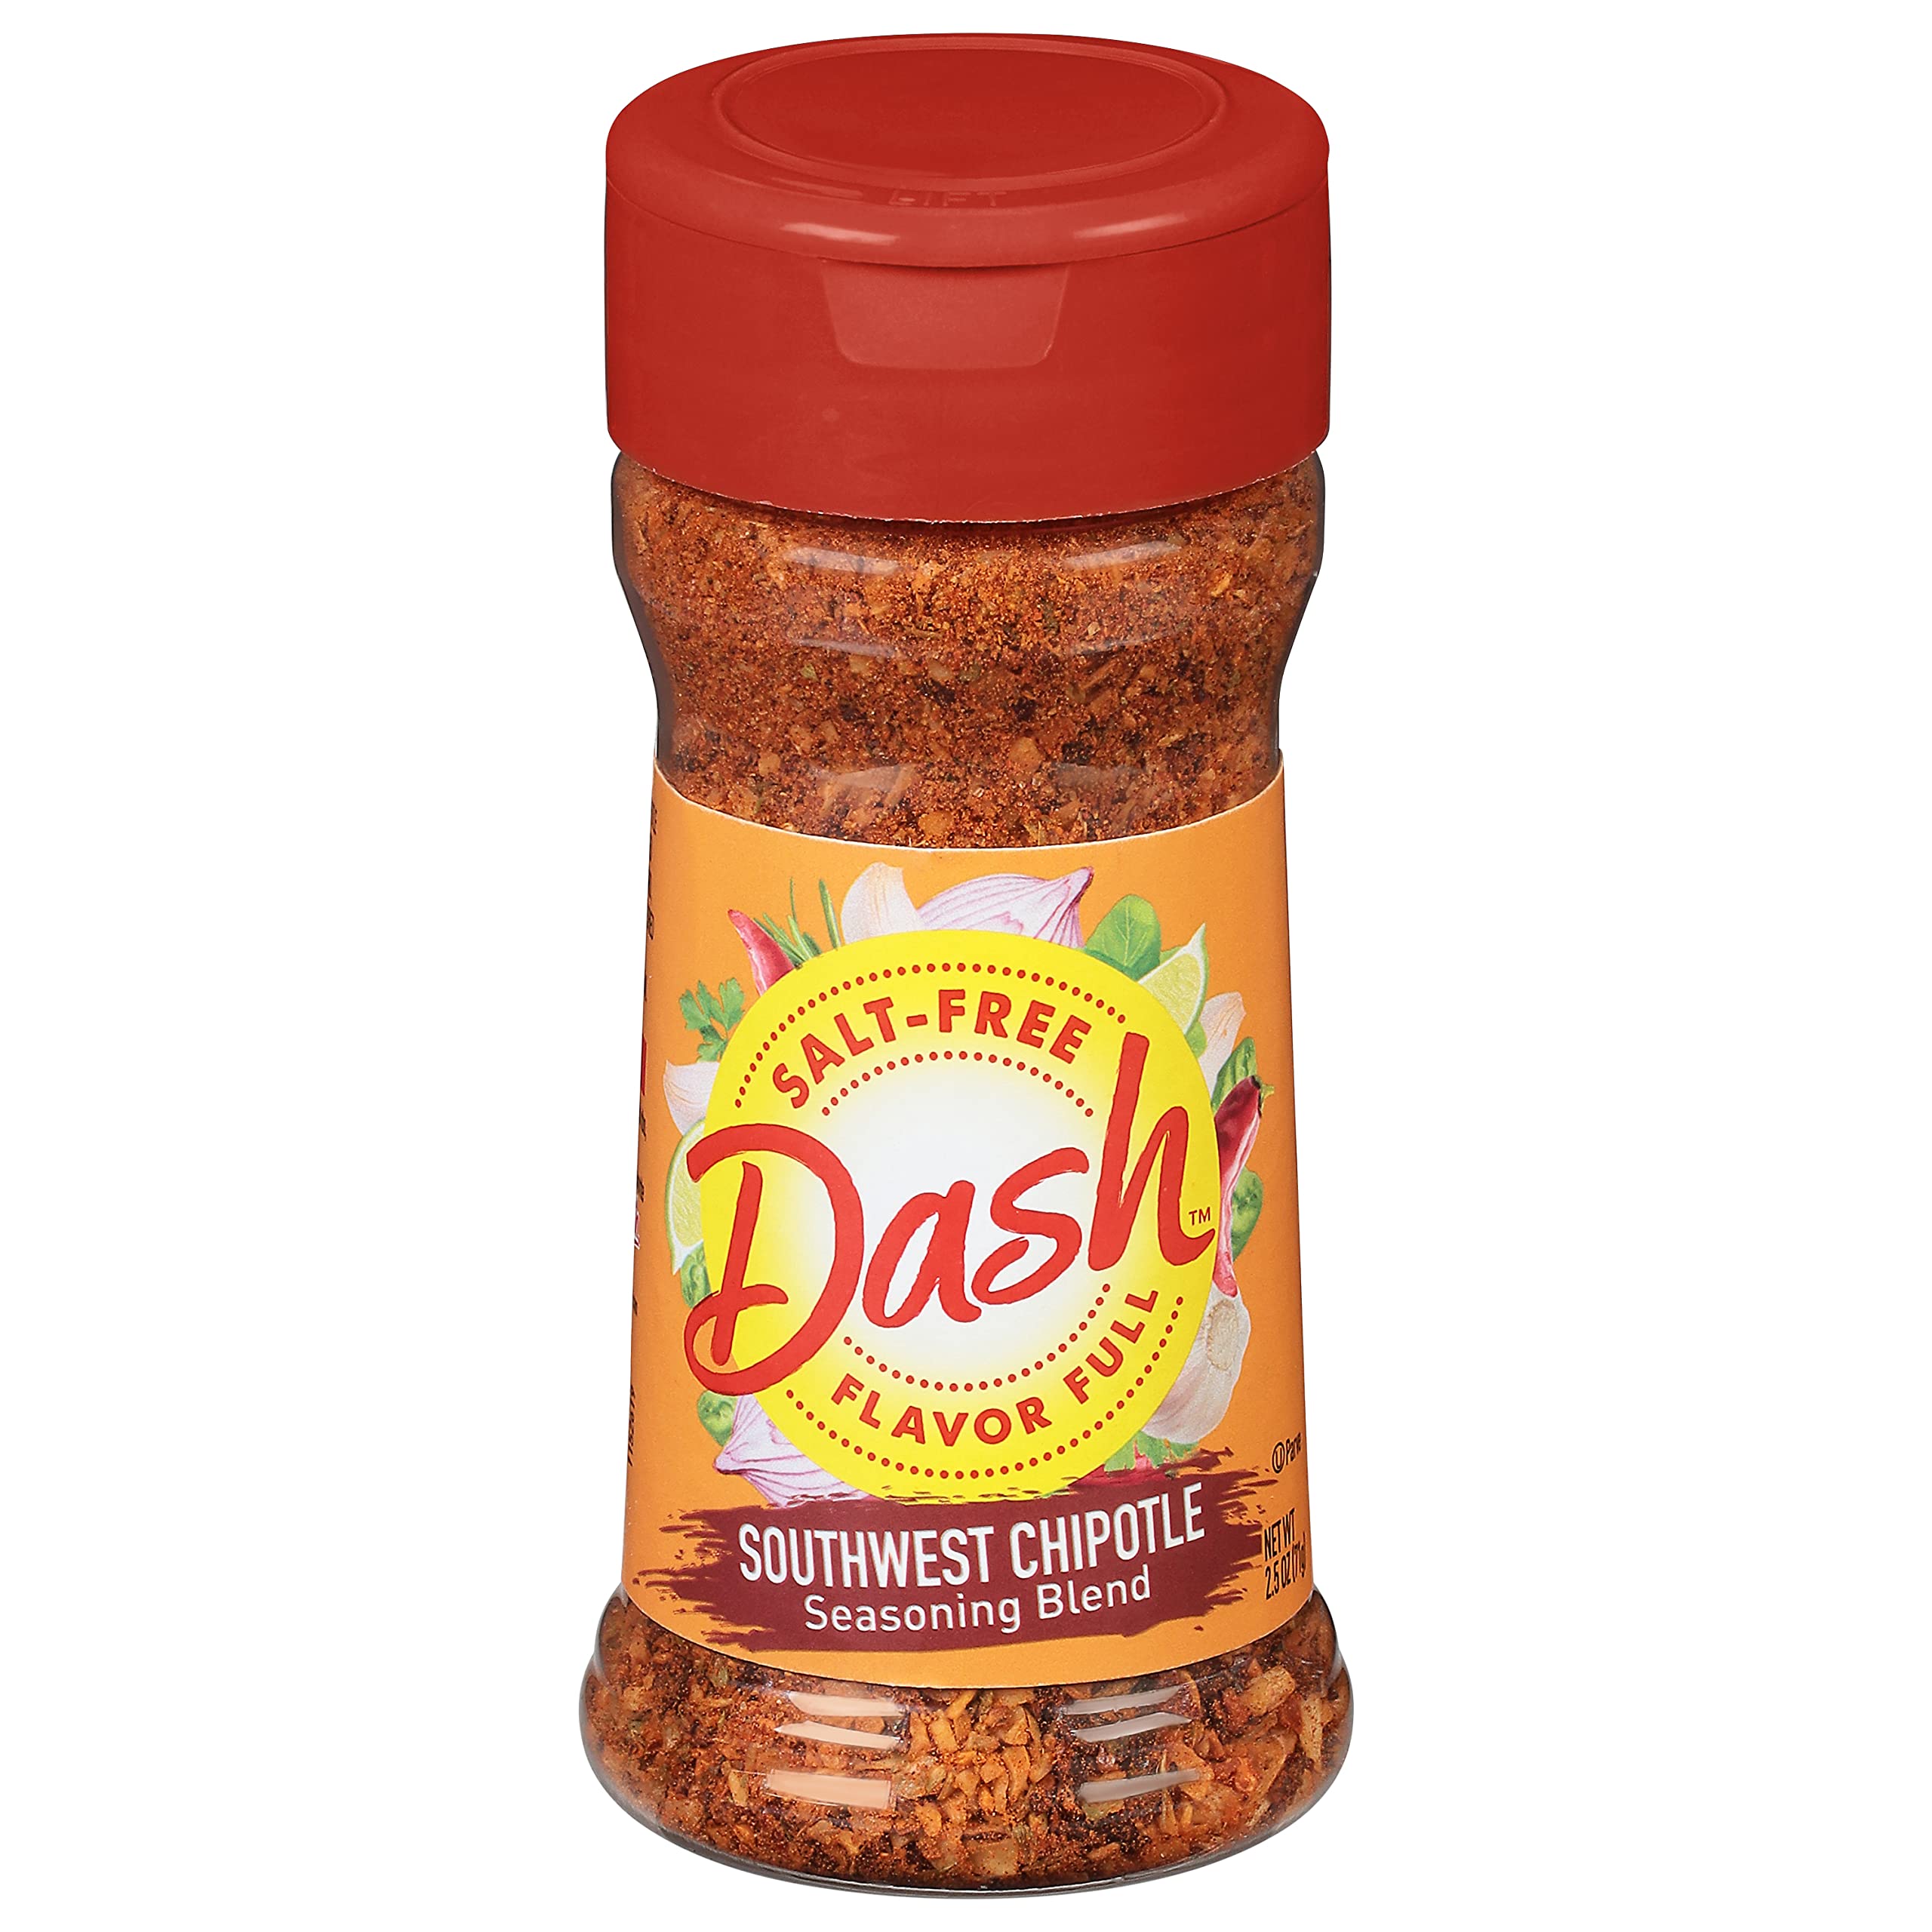 Dash Salt Free Seasoning Blend-Southwest Chipotle, 2.5 oz.-$2.39